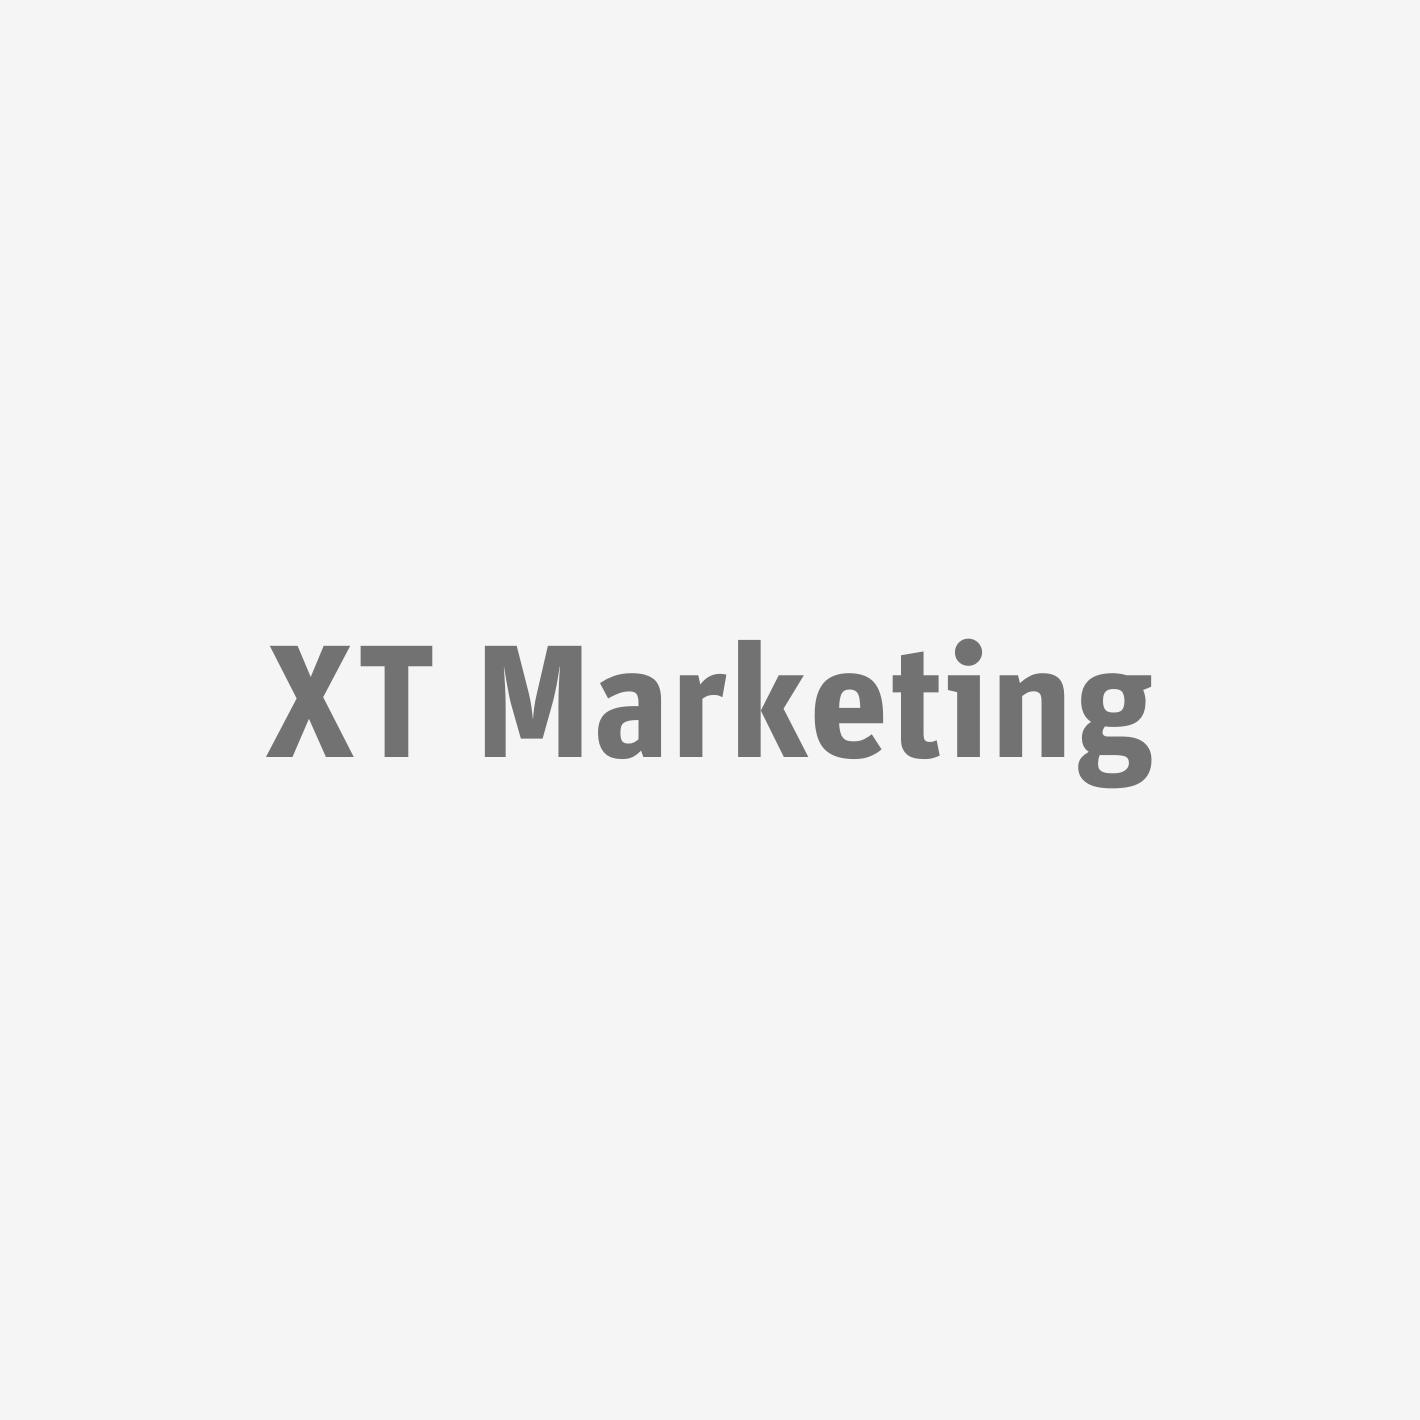 XT Marketing